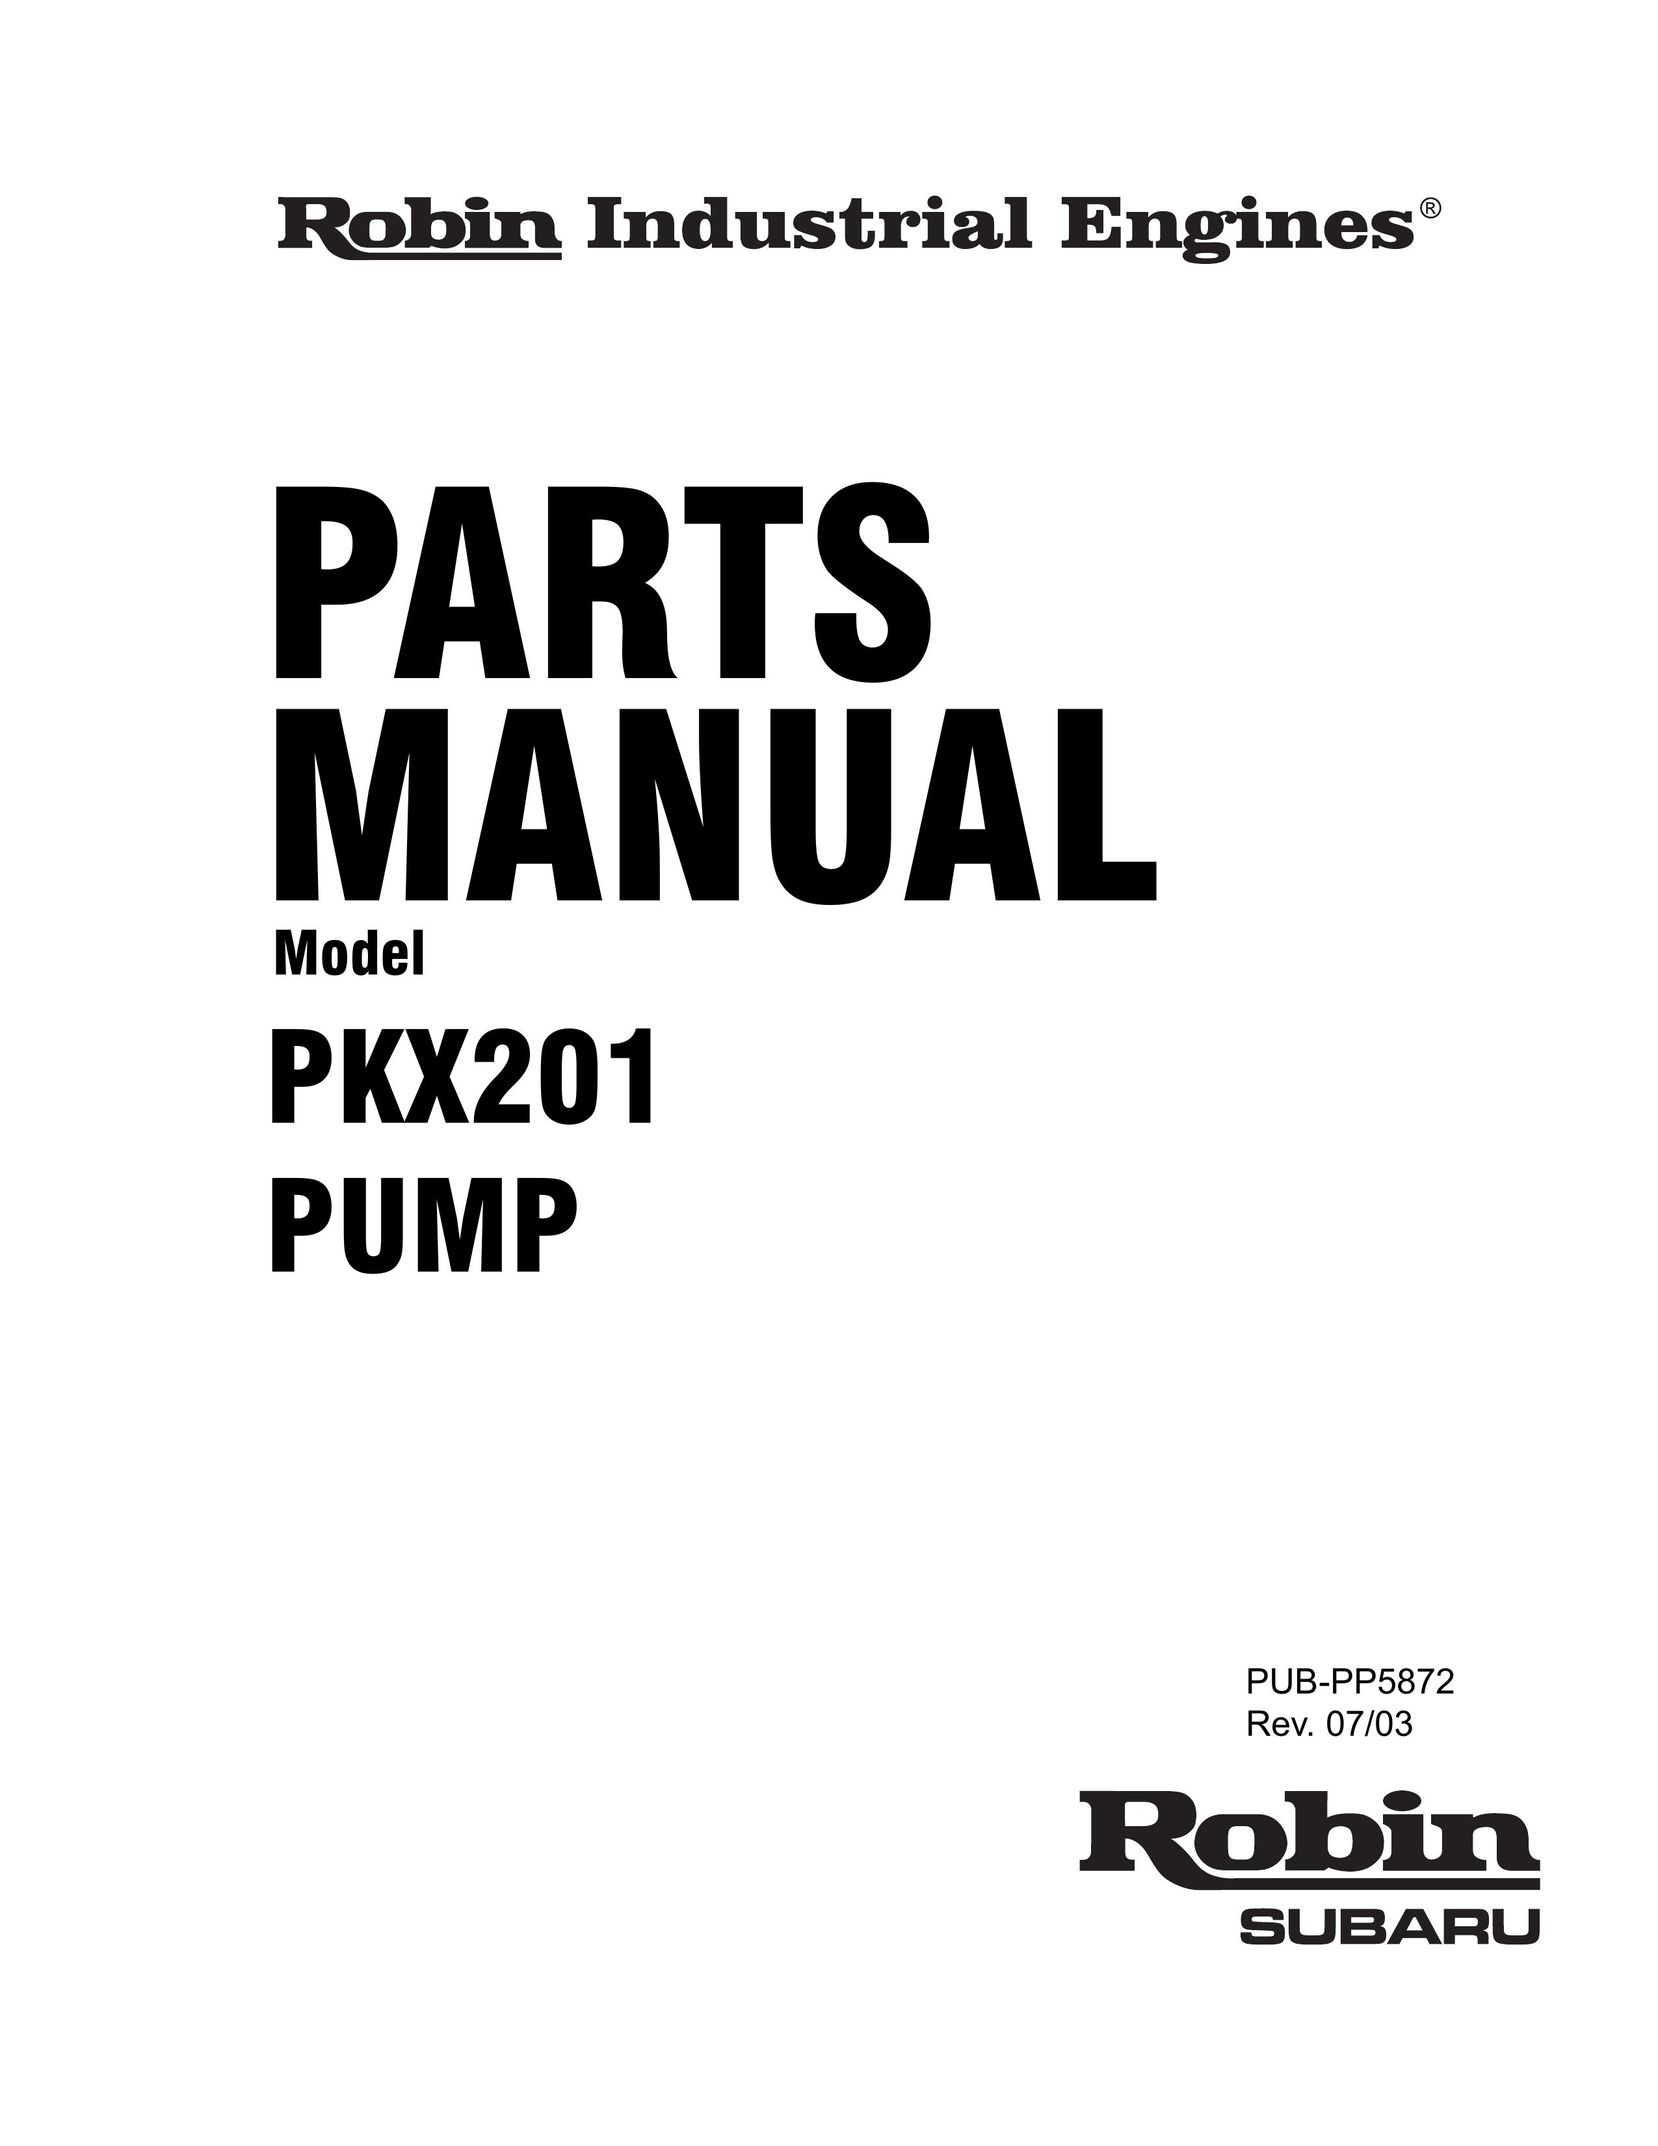 Subaru Robin Power Products PKX201 Septic System User Manual